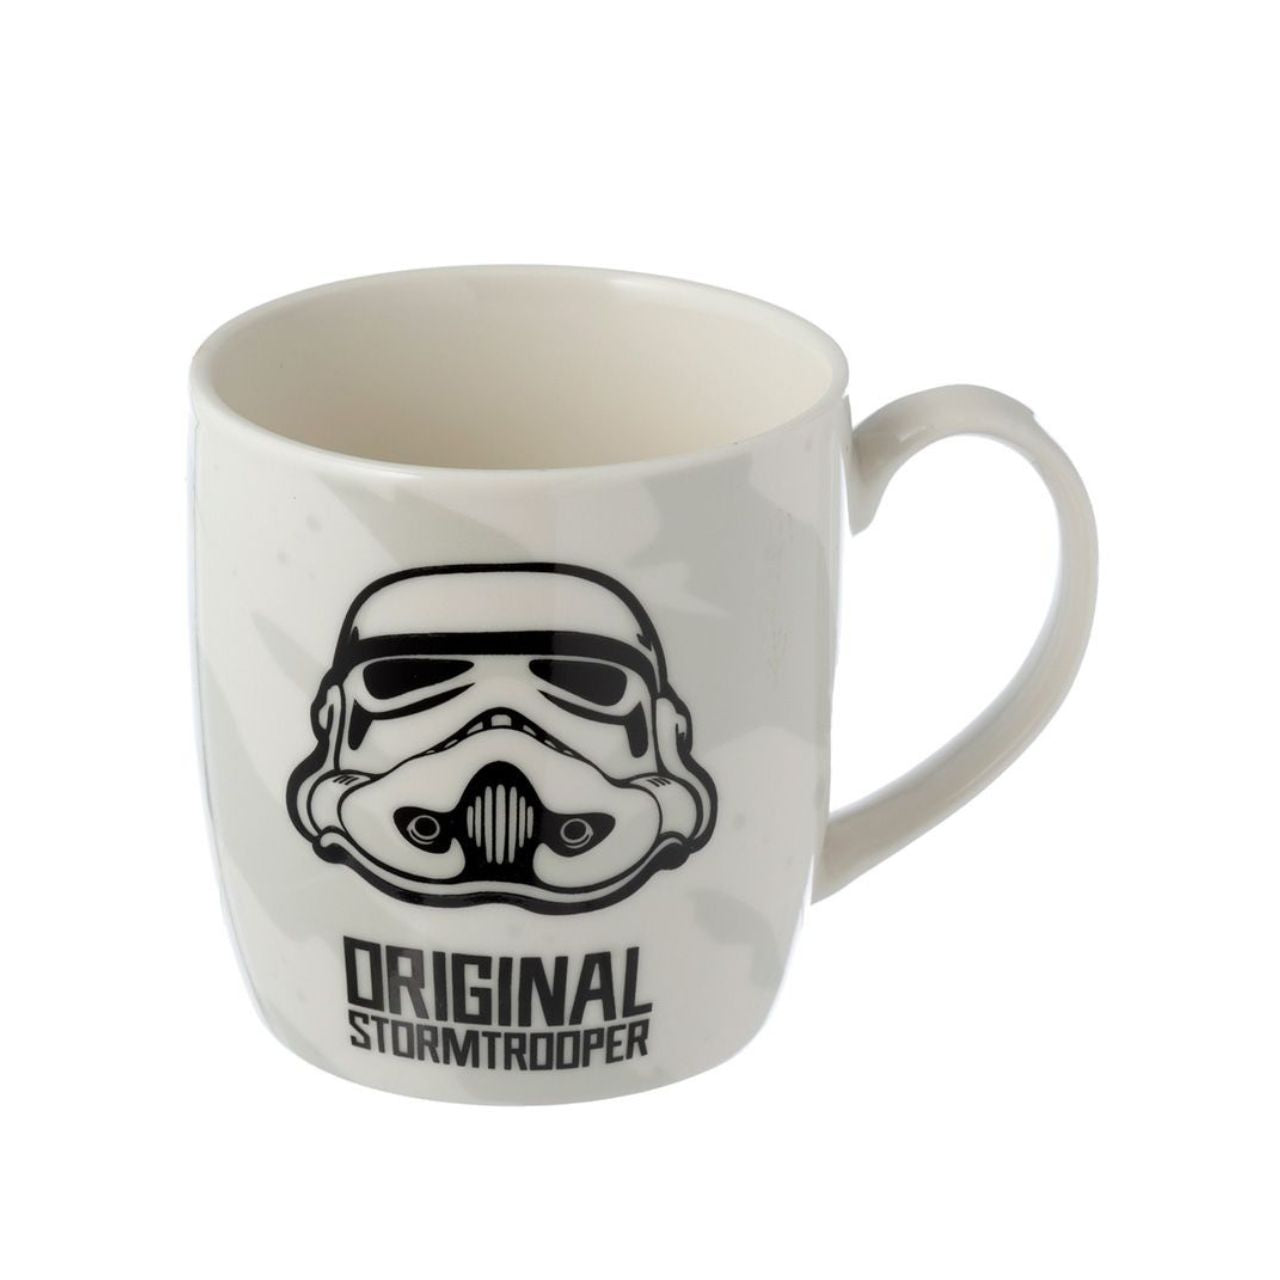 The Original Stormtrooper Infuser Mug Set with Lid  - Material: Porcelain and Metal